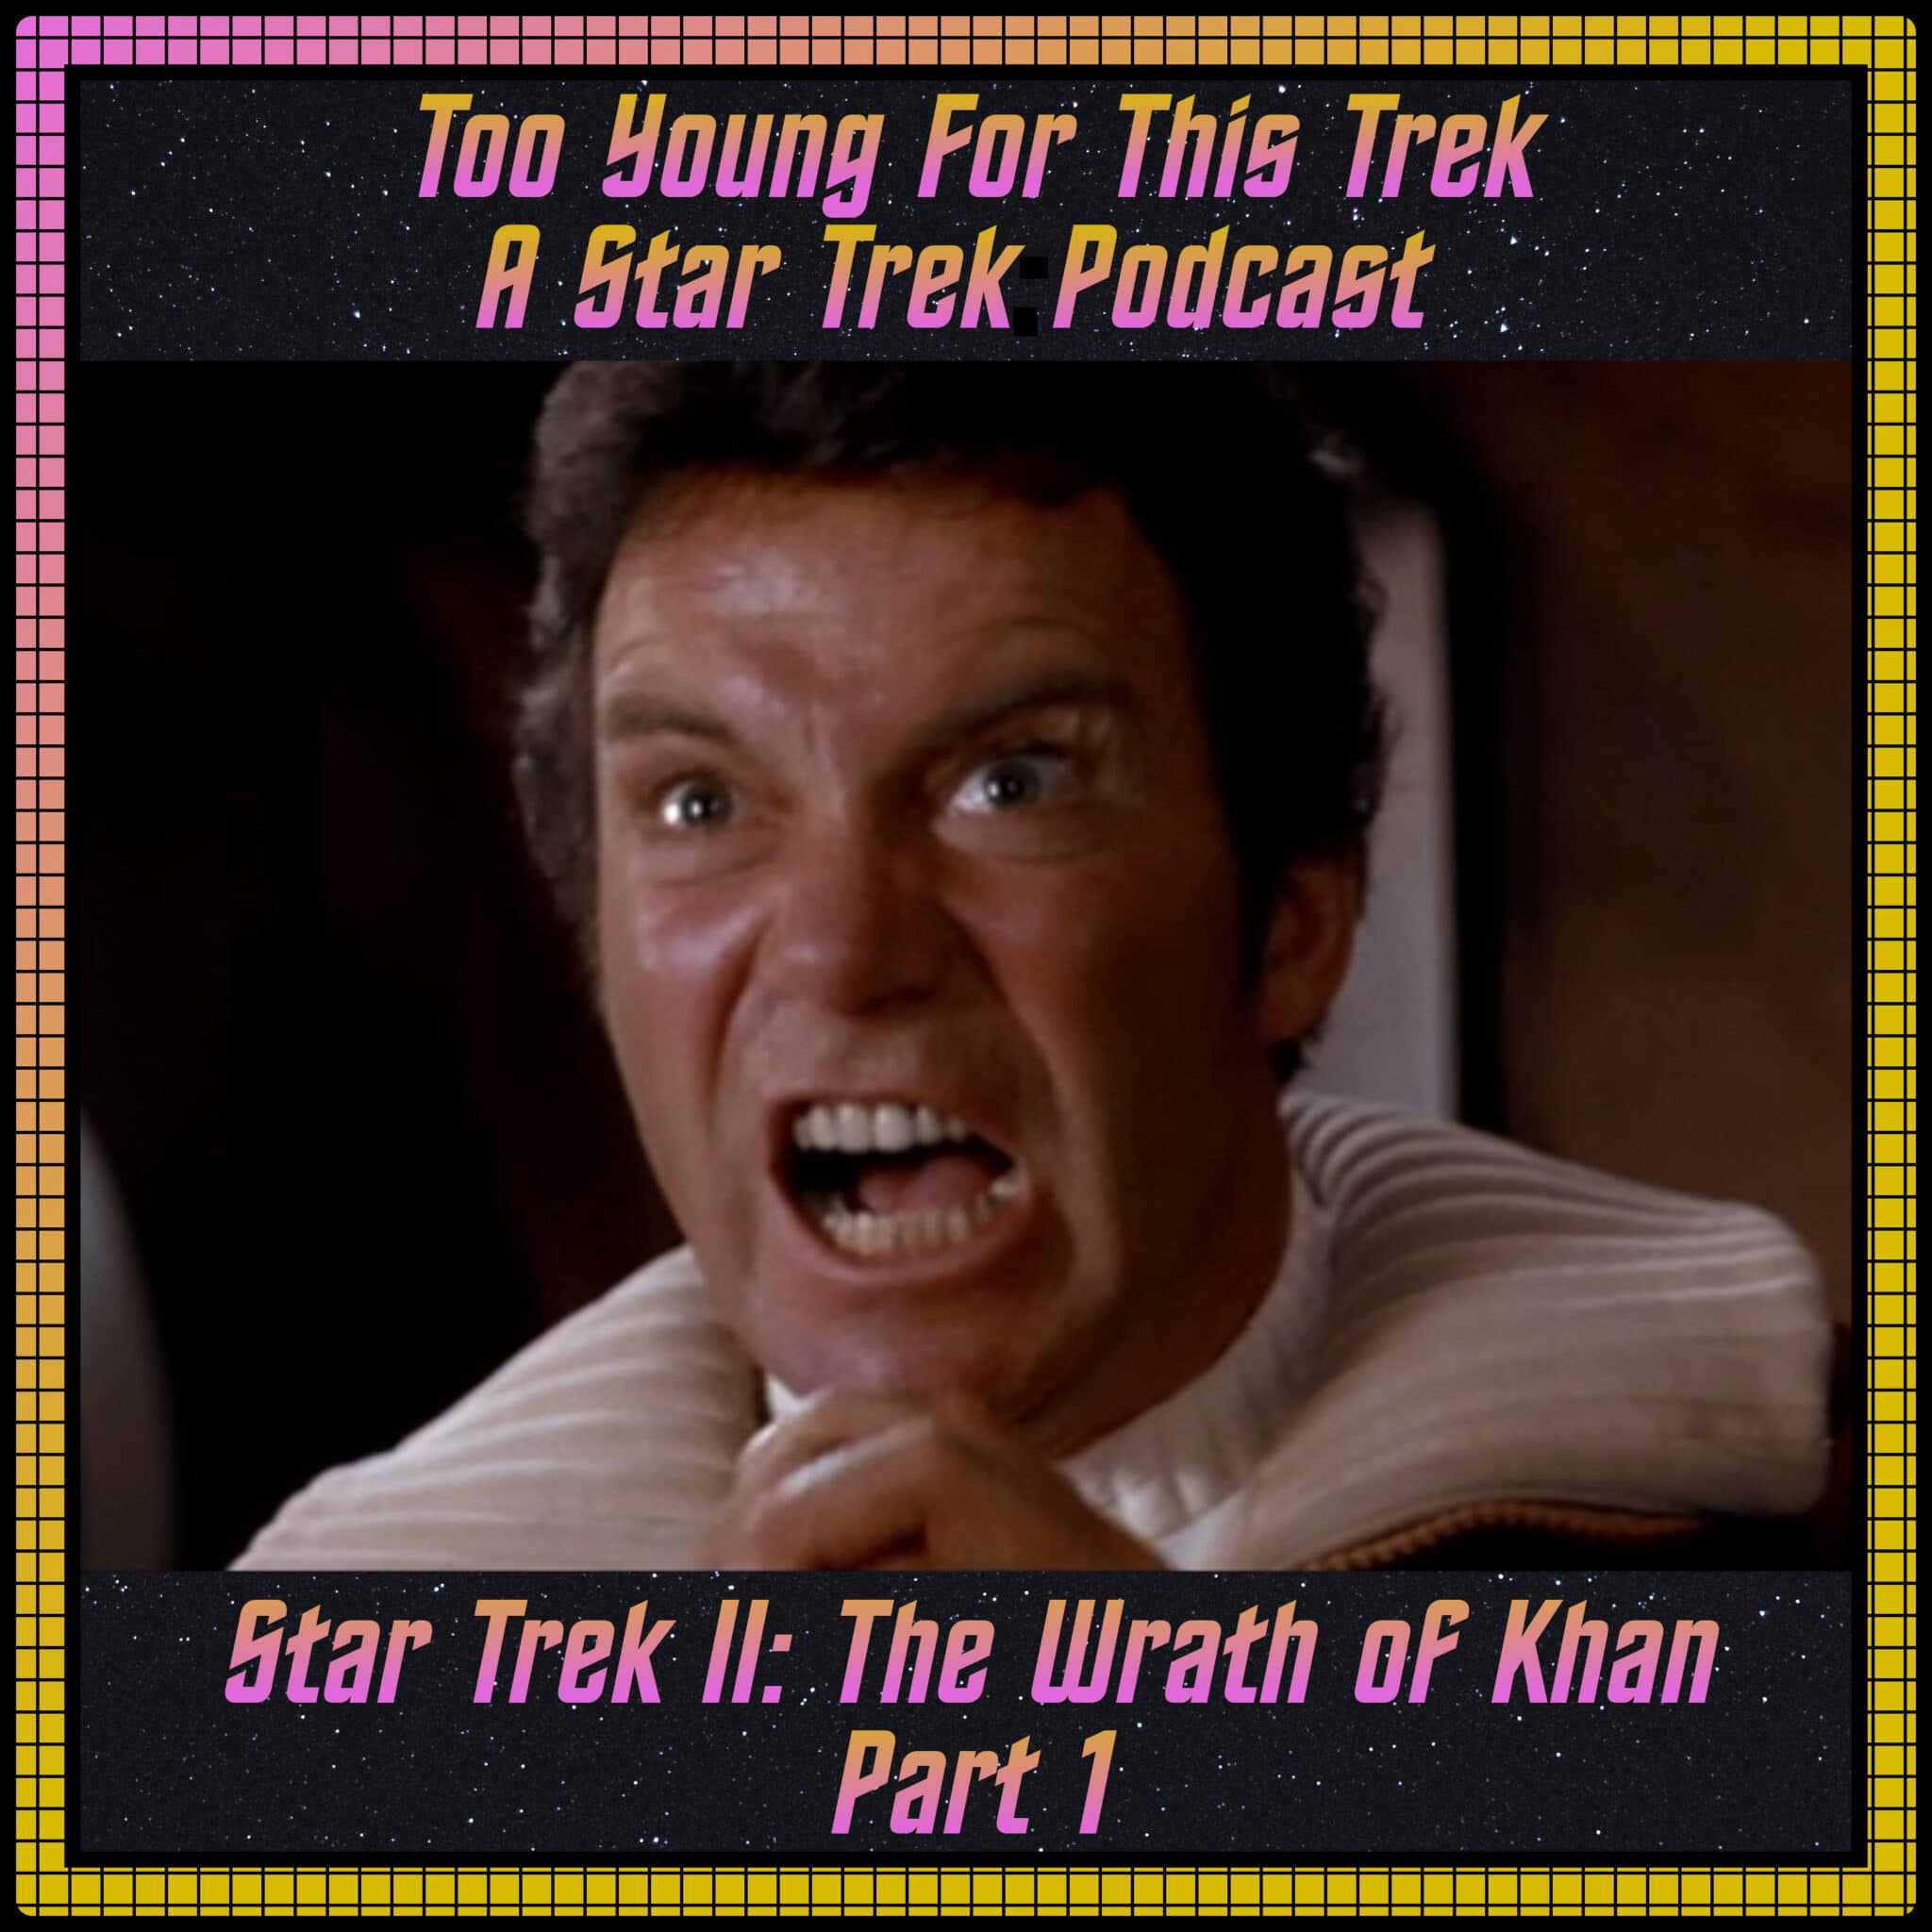 Star Trek II: The Wrath of Khan - Part 1